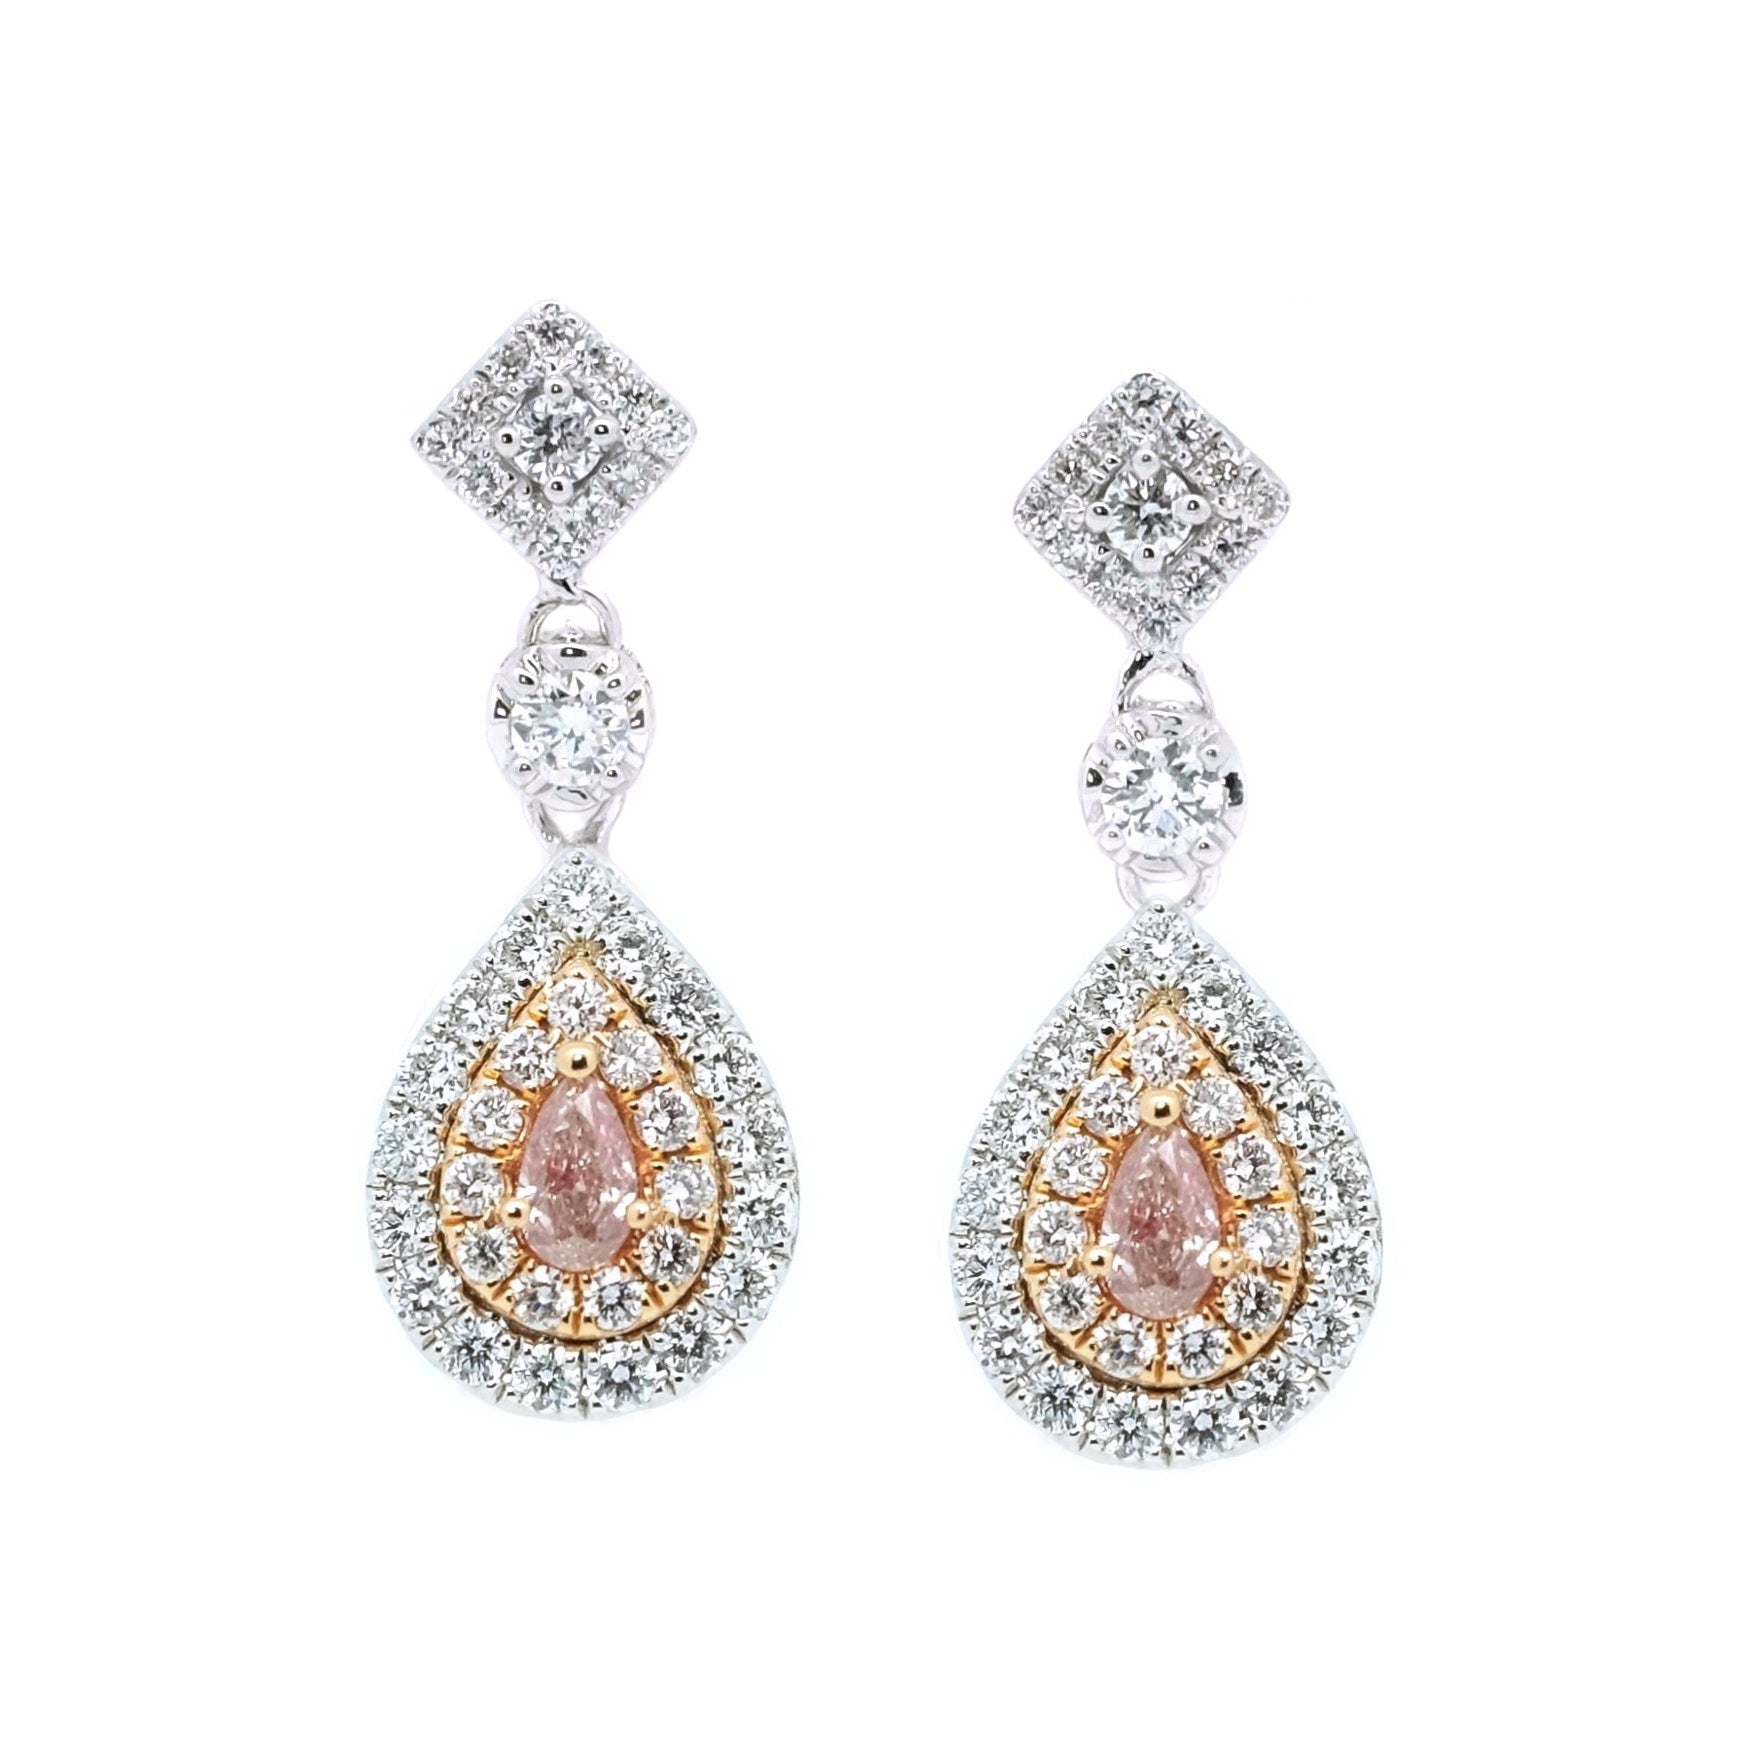 American Diamond Loop Earrings with Pink Crystals - Gift for Girlfriend or  Wife - Pretty in Pink Dangler Earrings by Blingvine